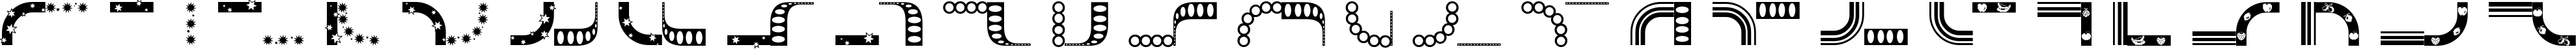 Пример написания английского алфавита шрифтом BorderMon  Series 1